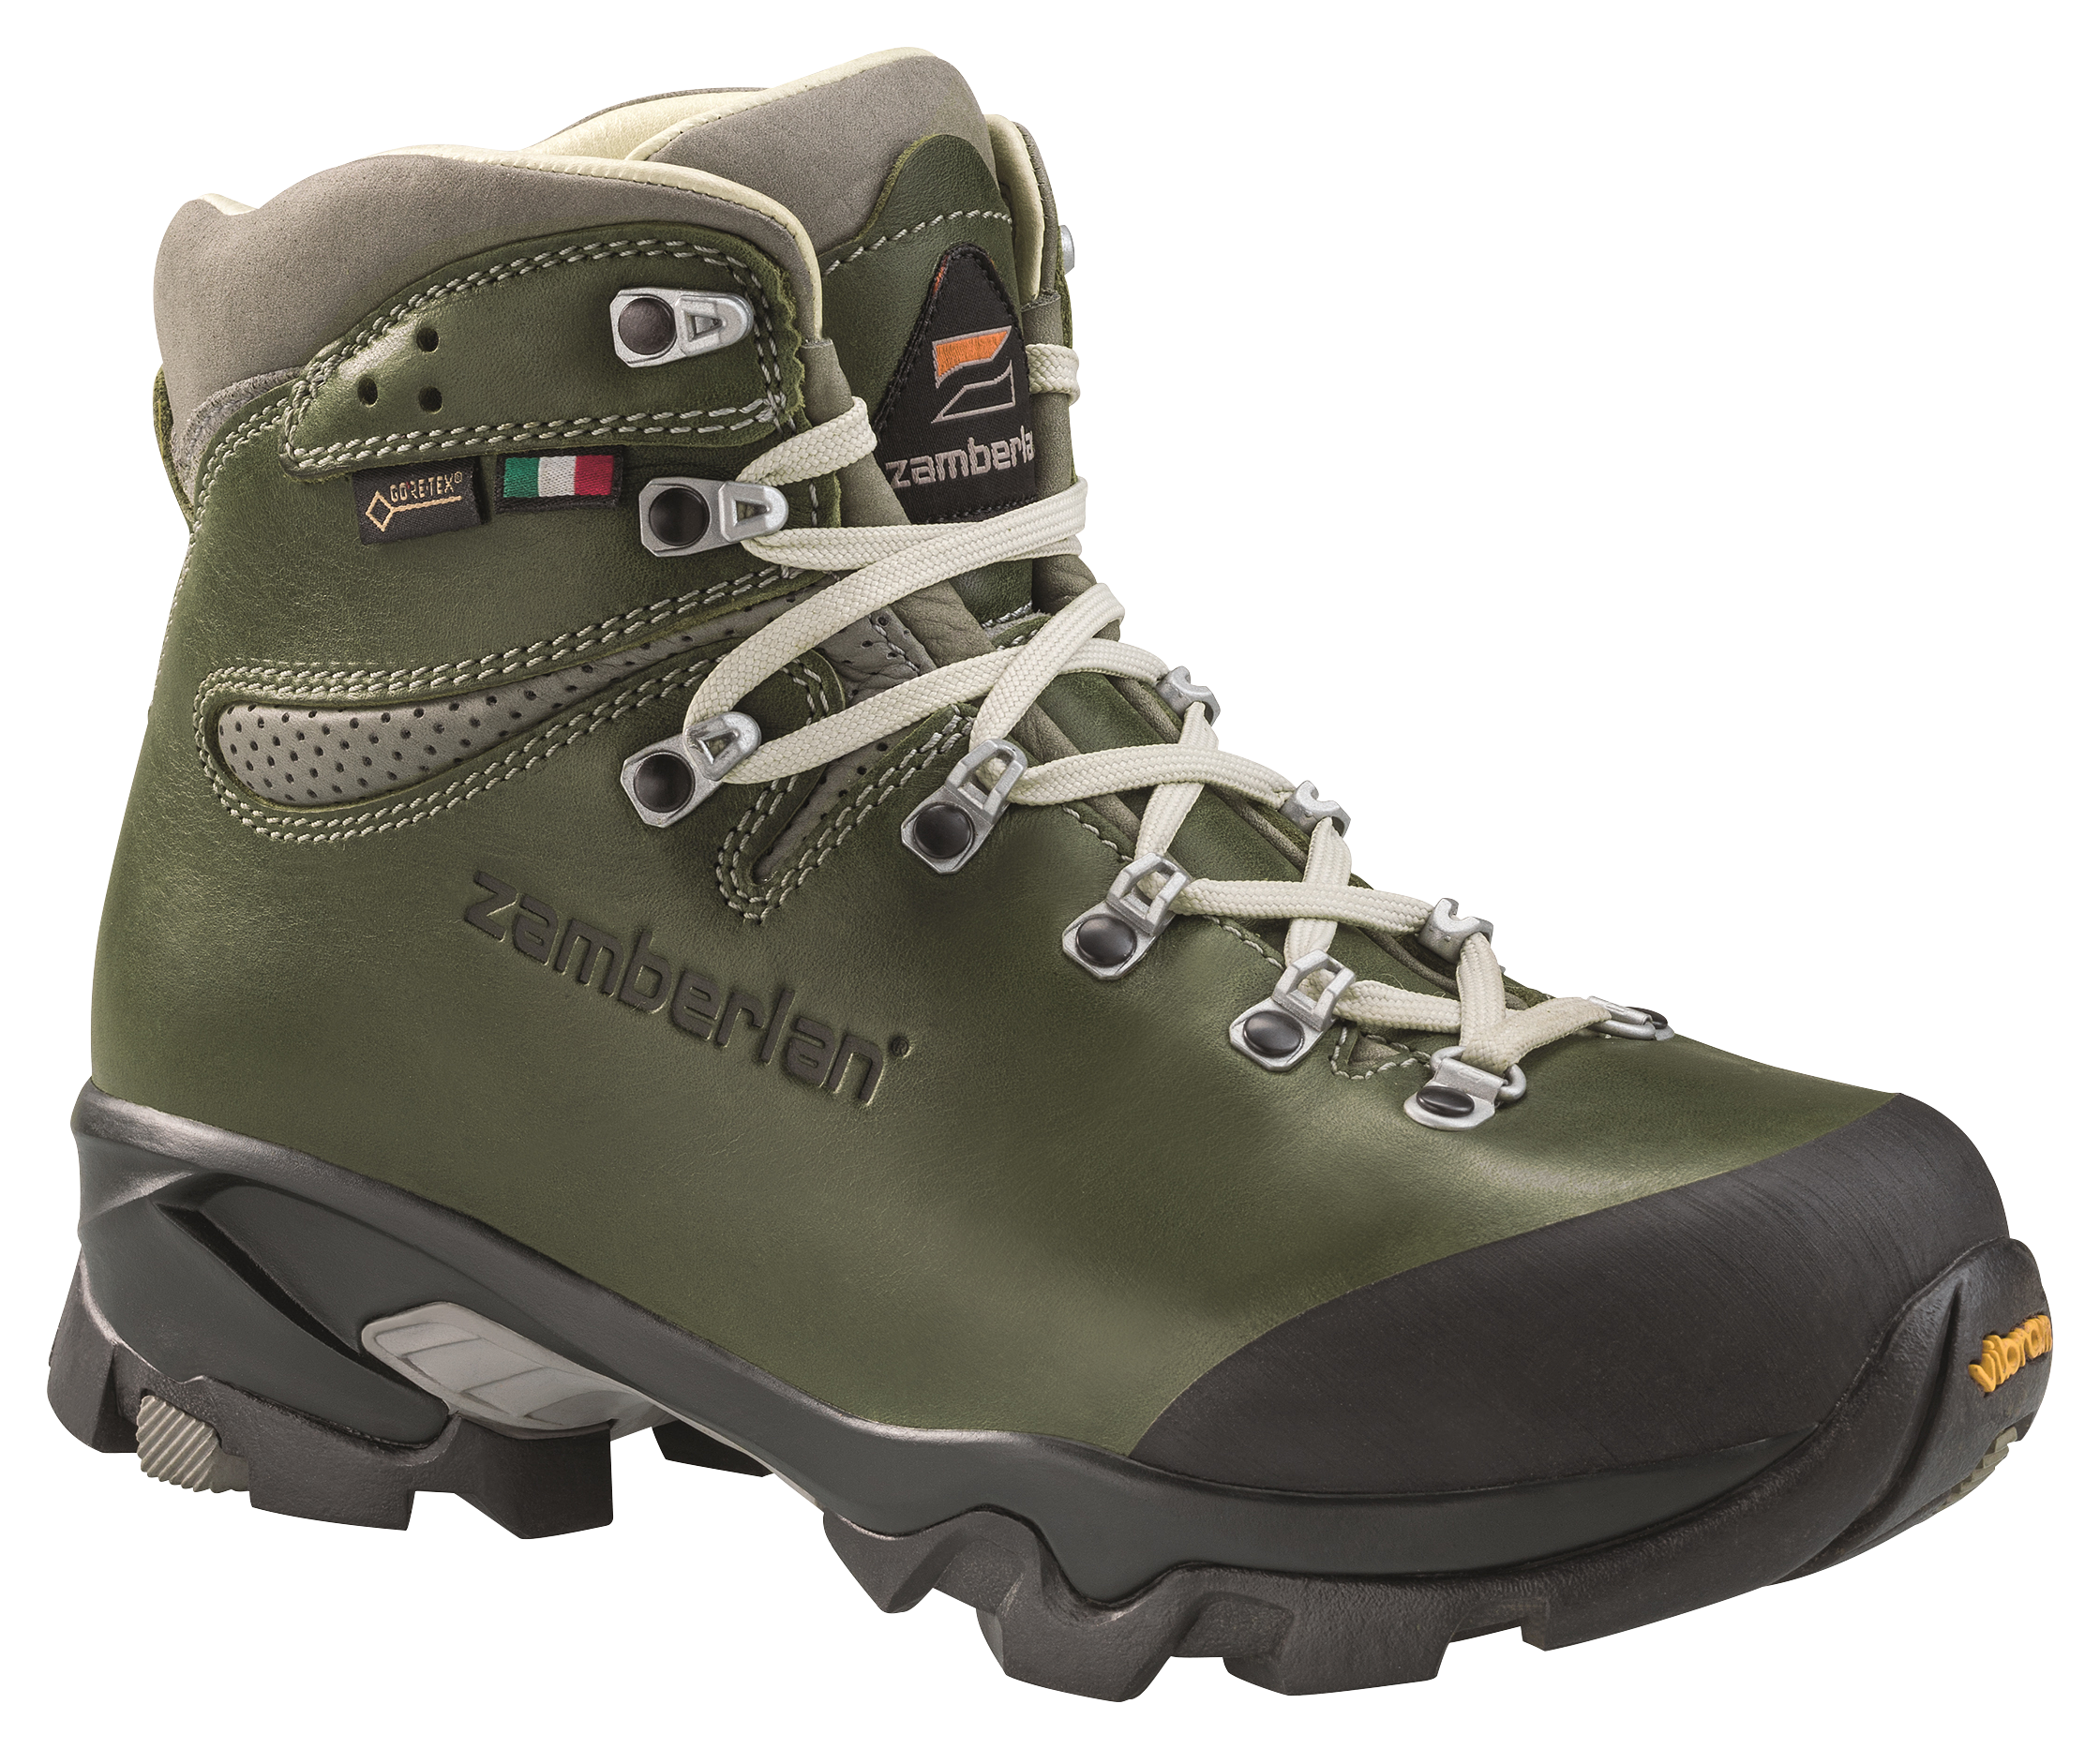 Zamberlan 1996 Vioz Lux GTX RR Waterproof Hiking Boots for Ladies - Waxed Green - 9 5M